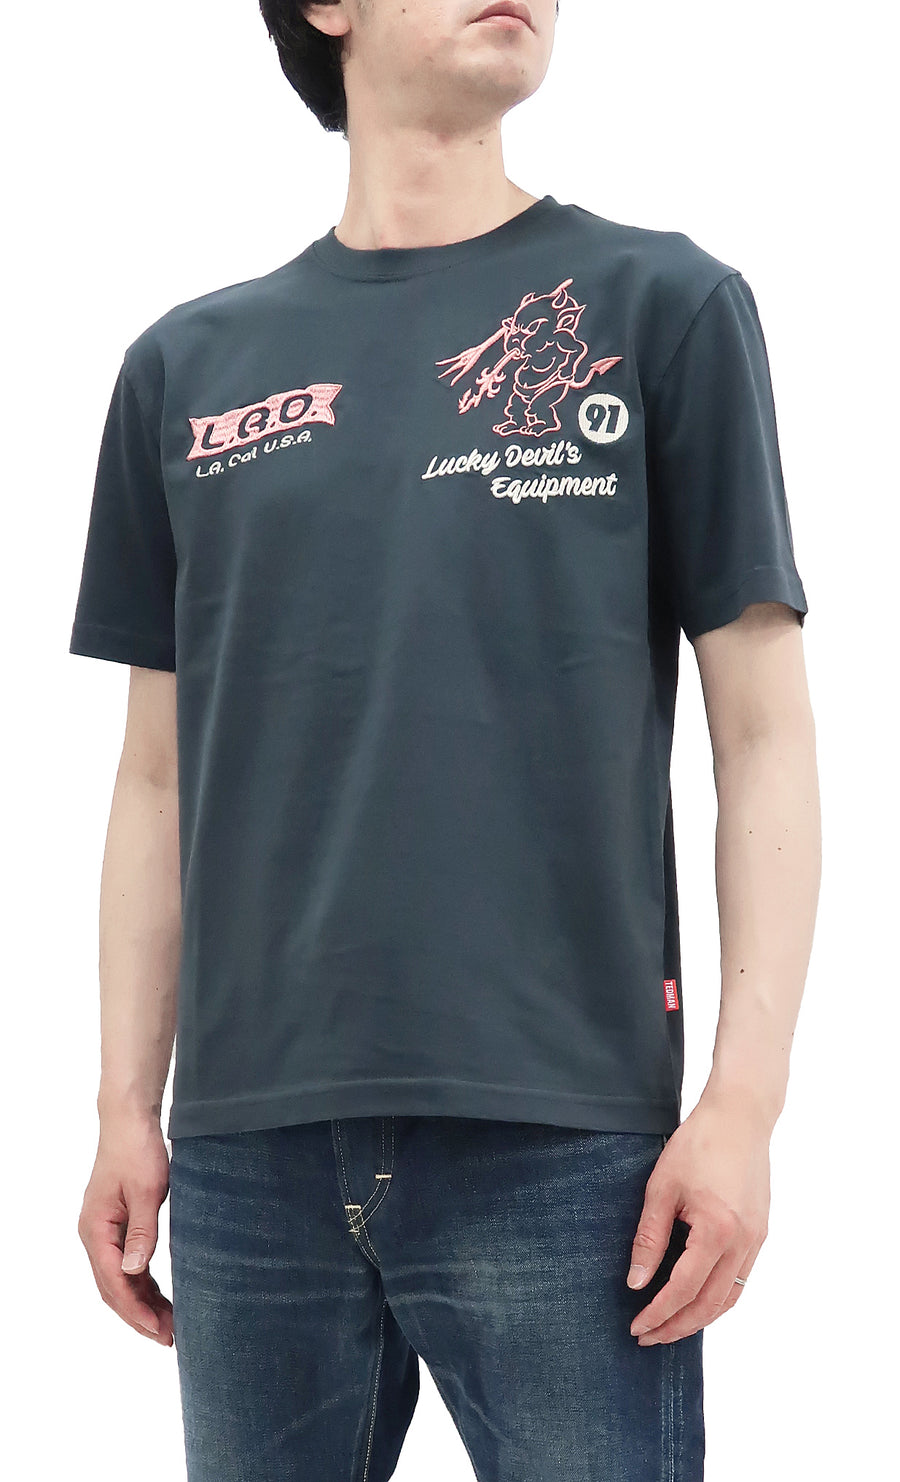 Tedman Embroidered T-Shirt Men's Lucky Devil Graphic Short Sleeve Tee Efu-Shokai TDSS-548 Faded-Dark-Blue